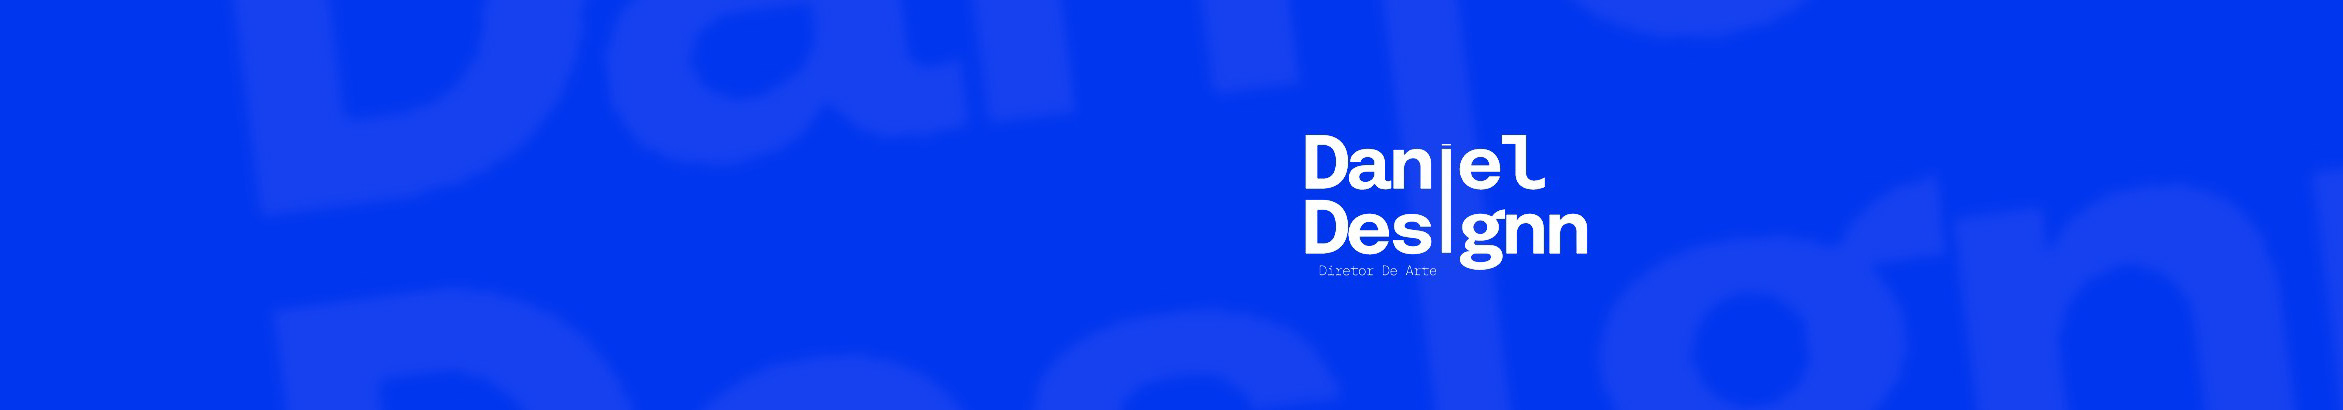 Daniel Designns profilbanner